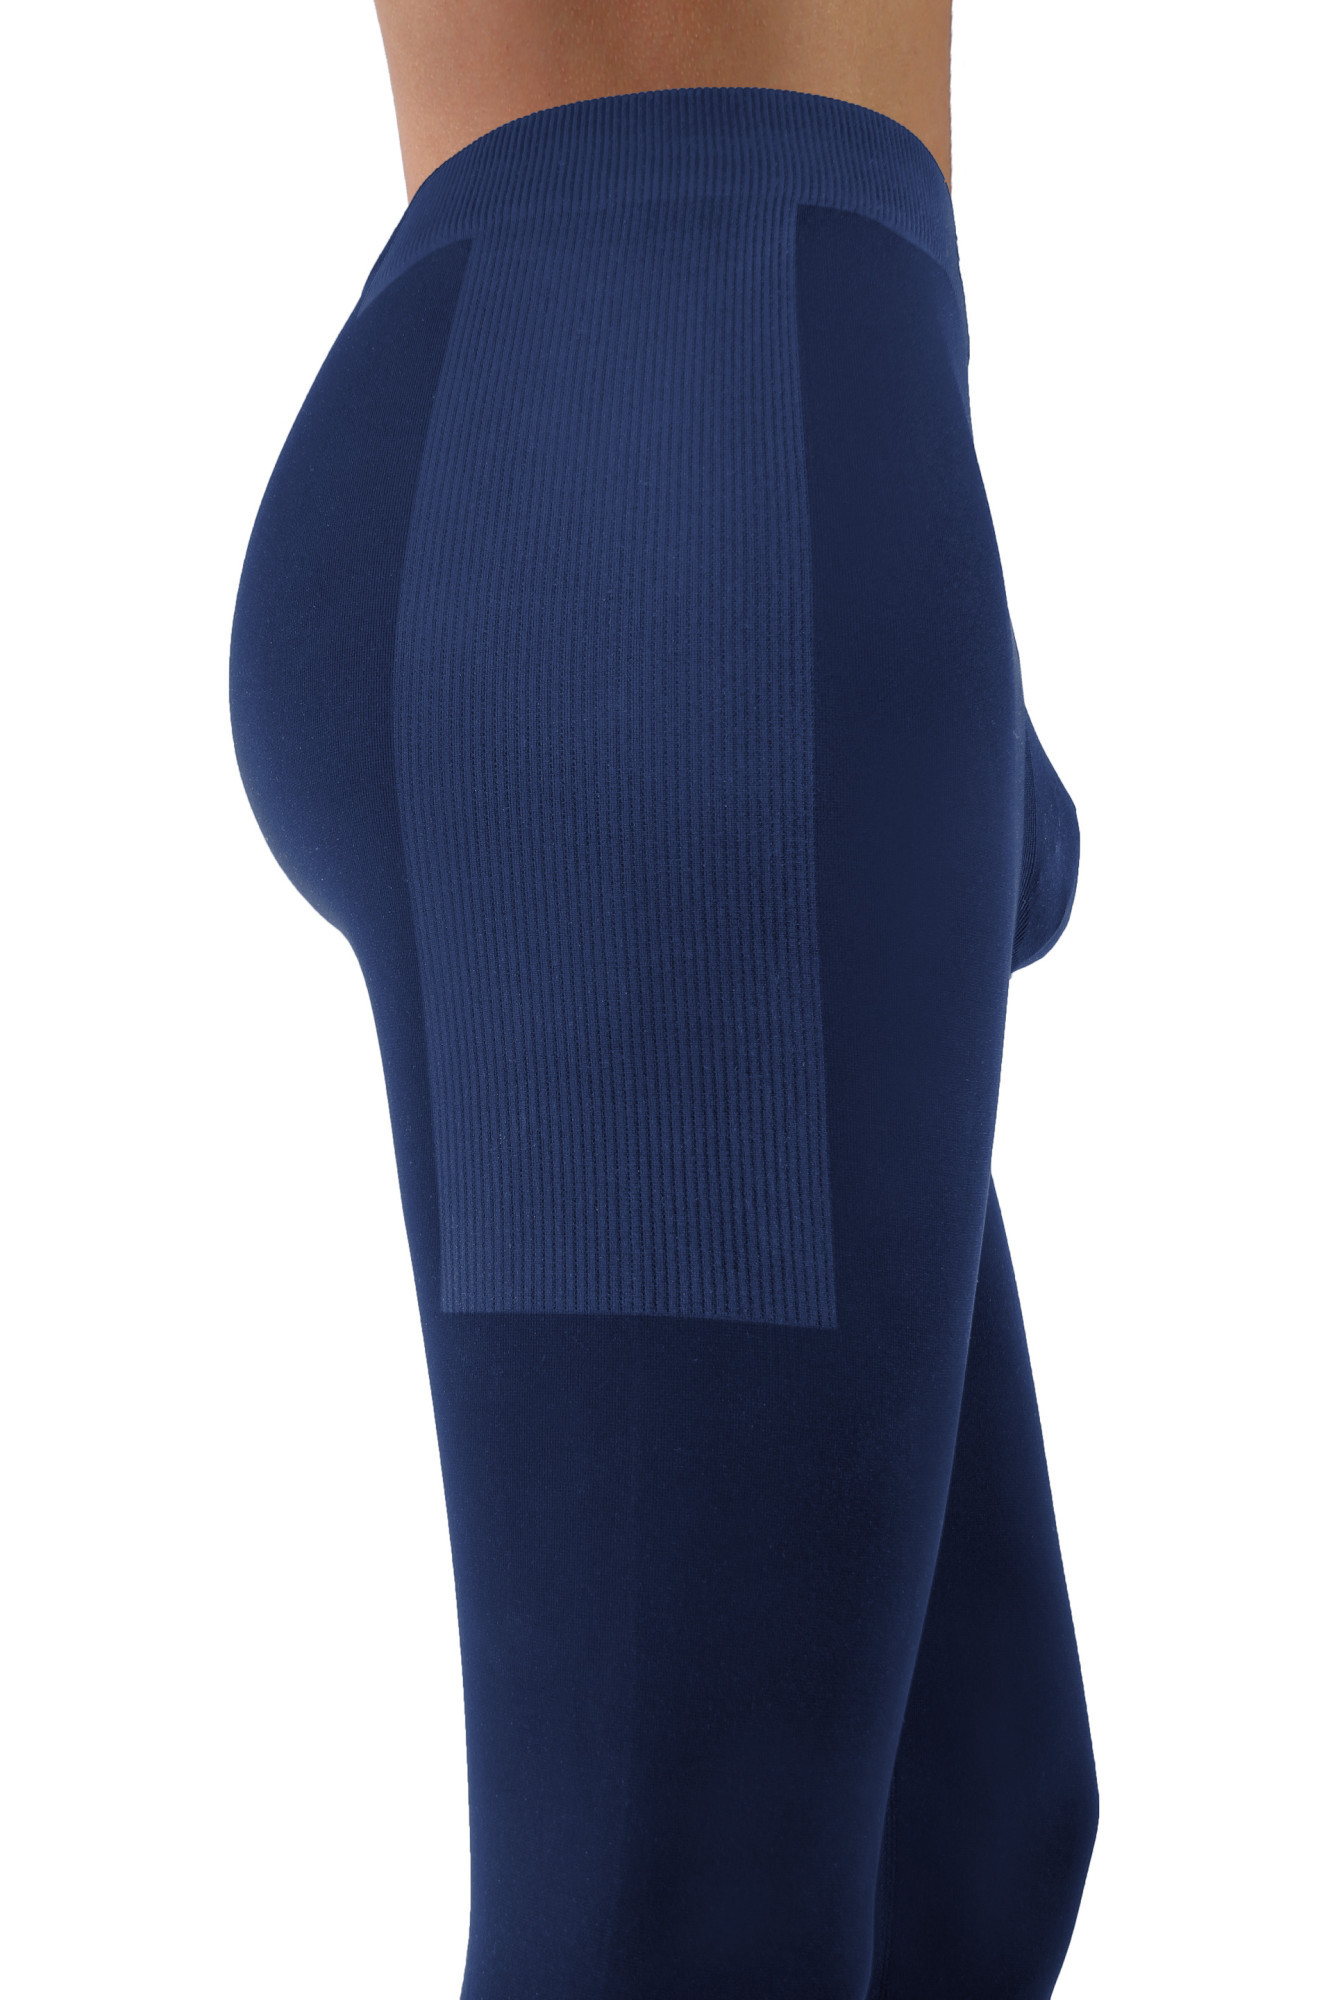 Kalhoty Sesto Senso Thermo CL42 Navy Blue L/XL